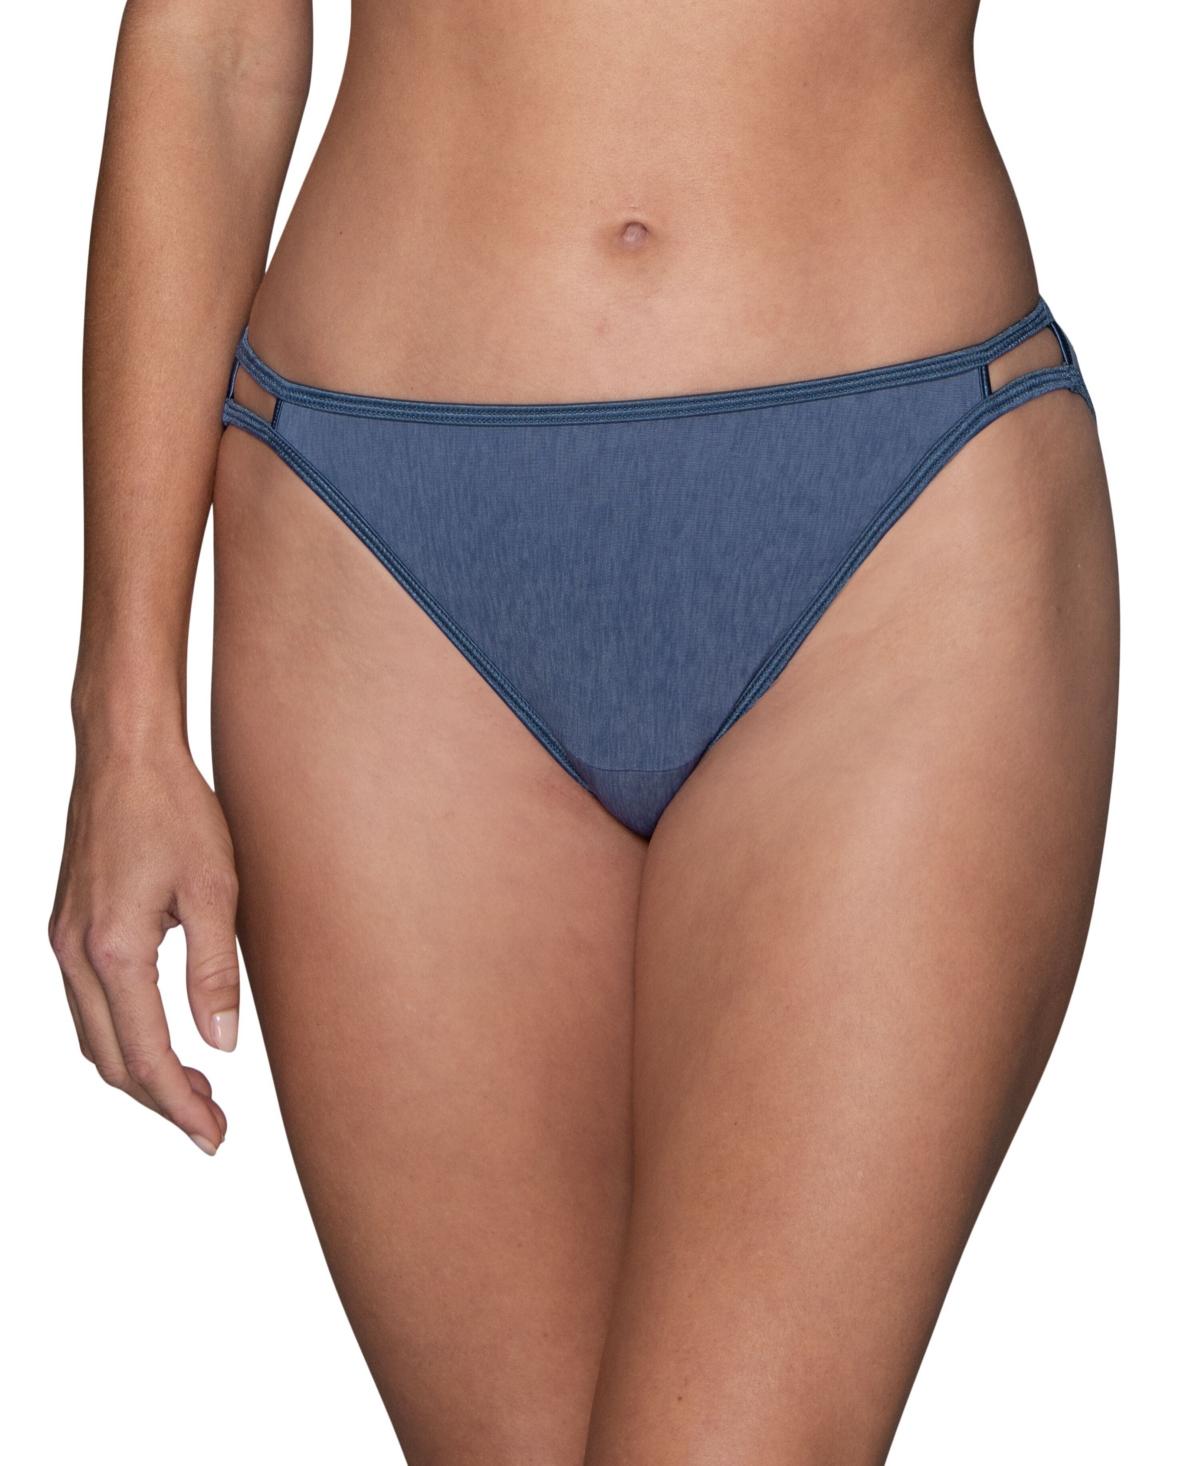 https://cdna.lystit.com/photos/macys/e13a4511/vanity-fair-Blue-Harbor-Illumination-String-Bikini-Underwear-18108.jpeg